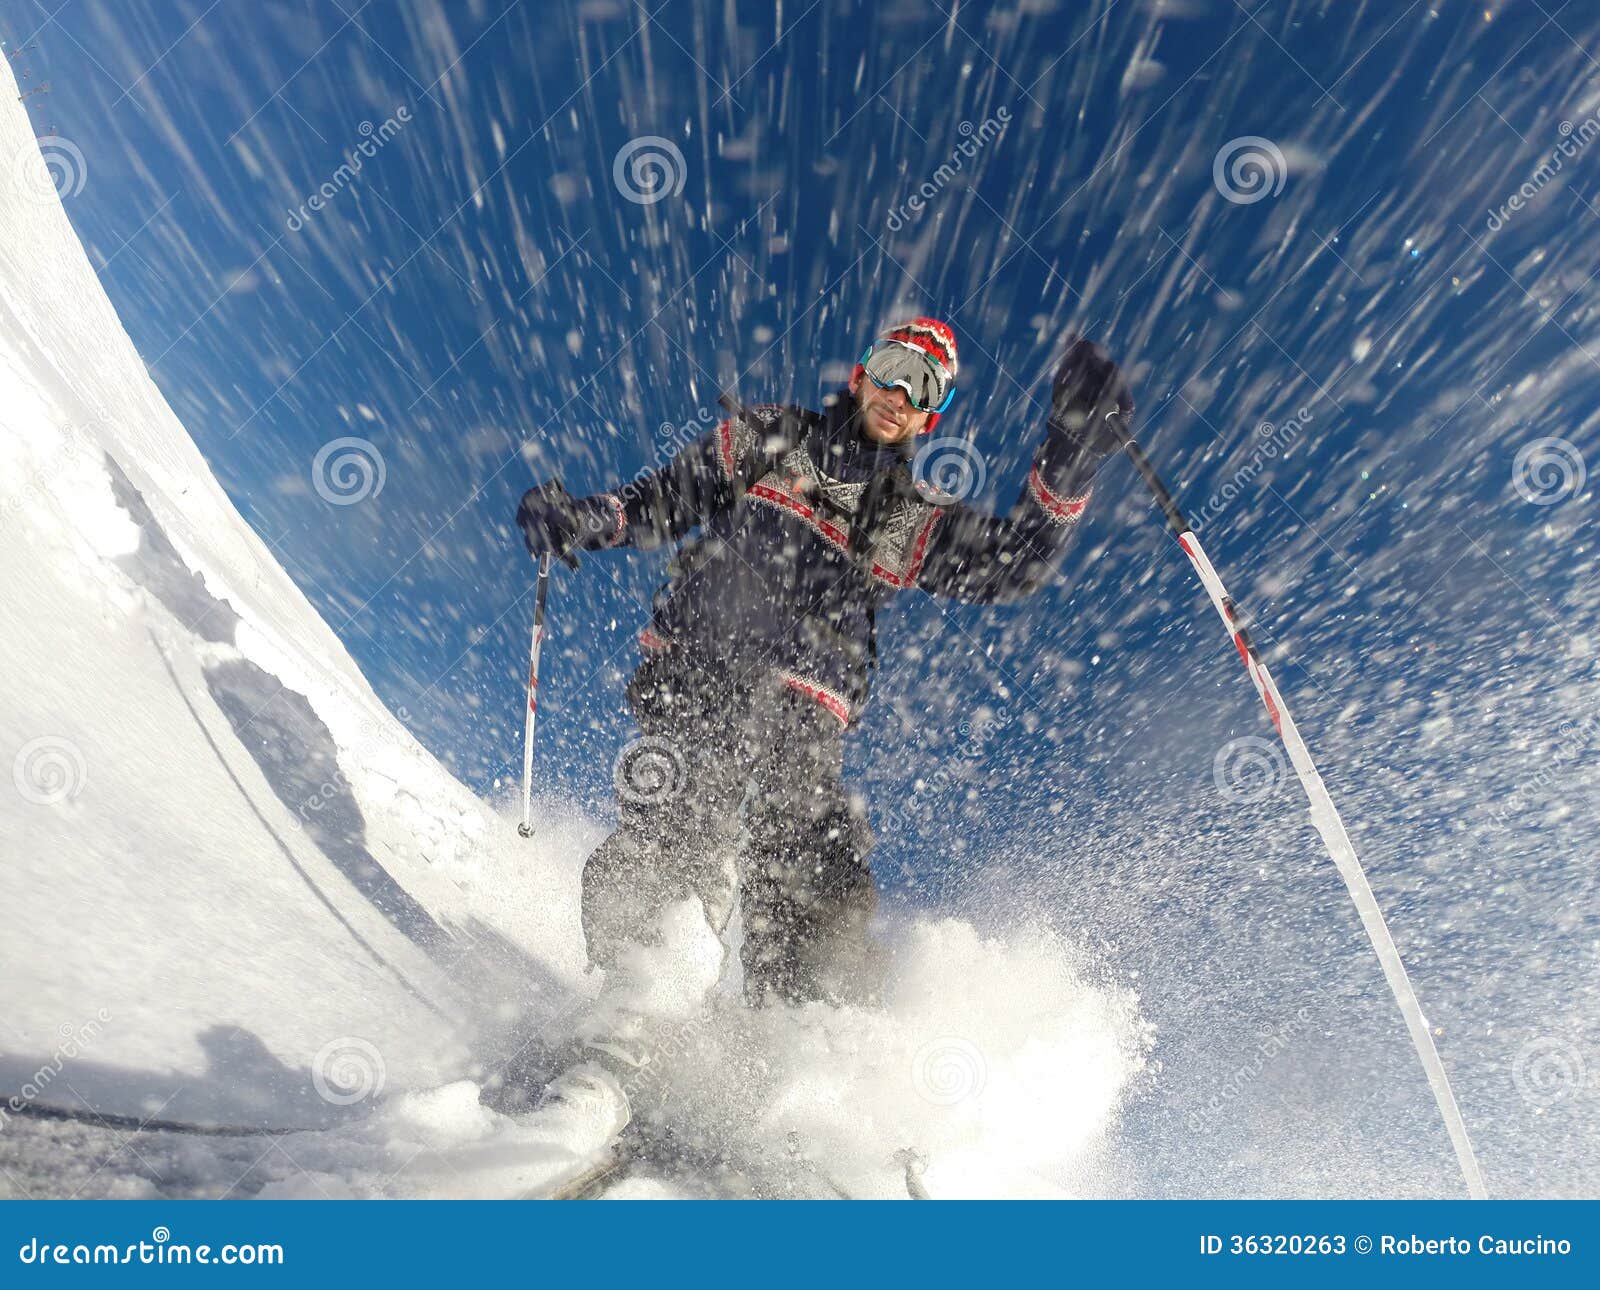 downhill alpine skiing at high speed on powder snow.